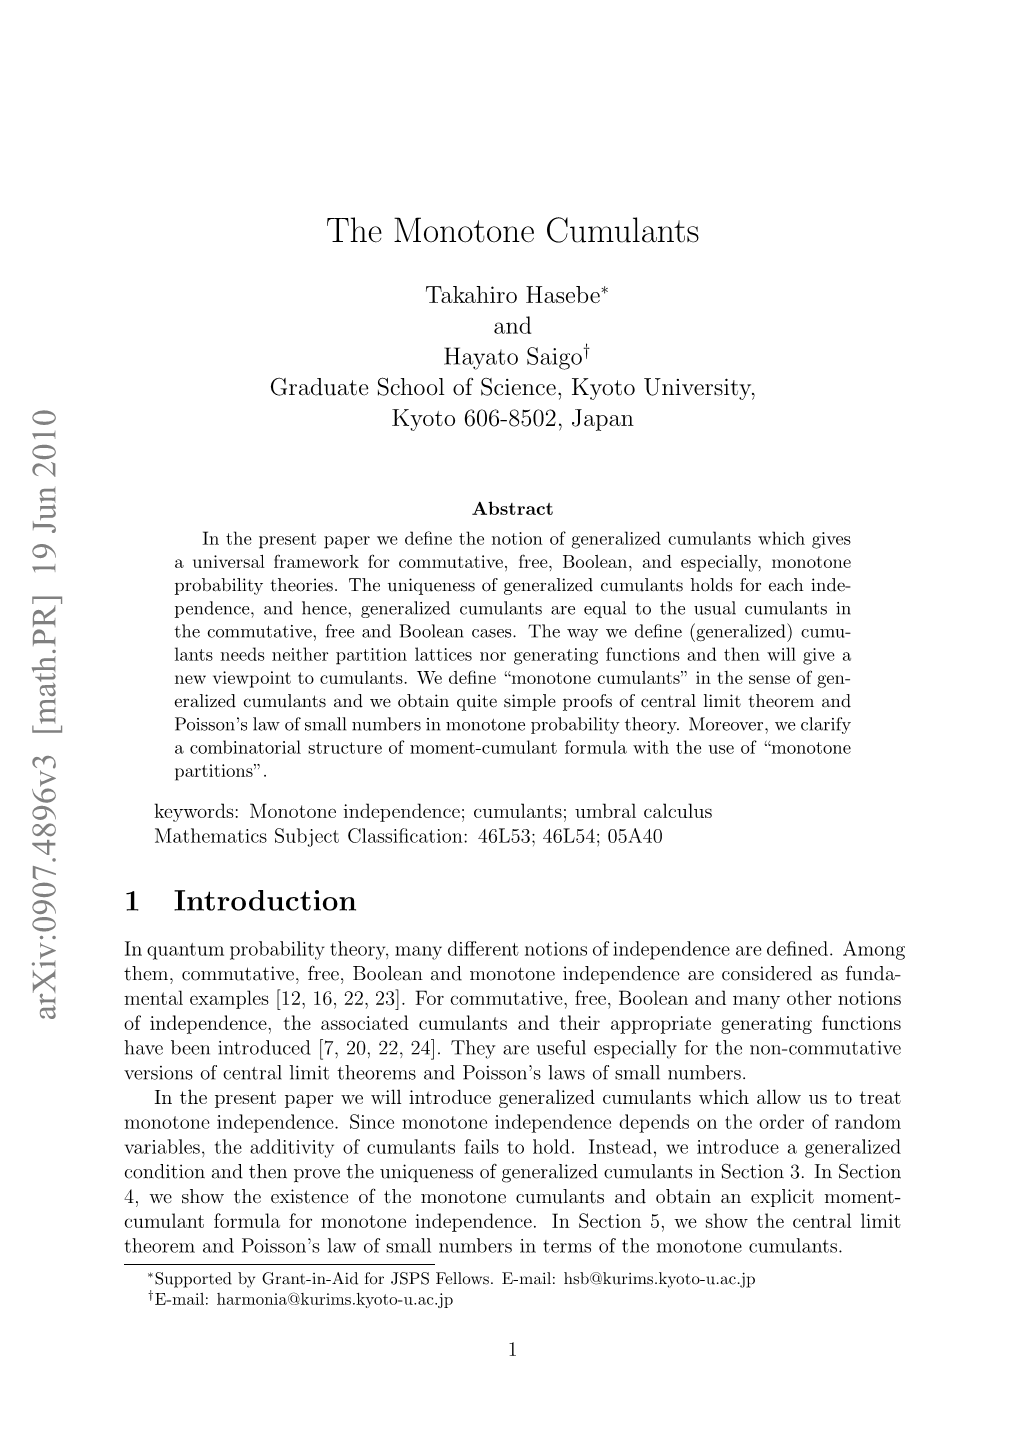 [Math.PR] 19 Jun 2010 the Monotone Cumulants